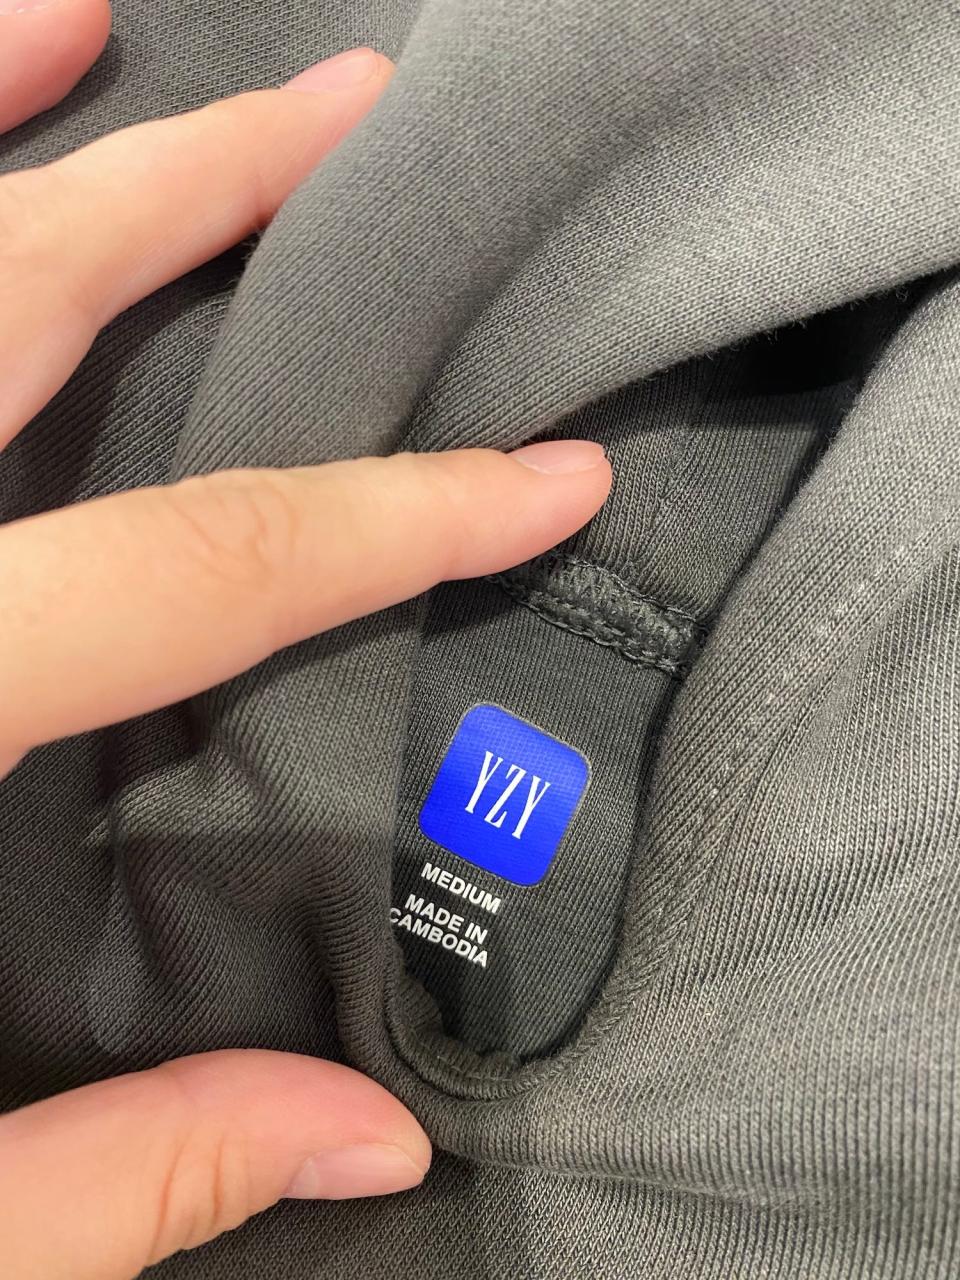 A Yeezy tag on a Gap sweatshirt in August 2022.